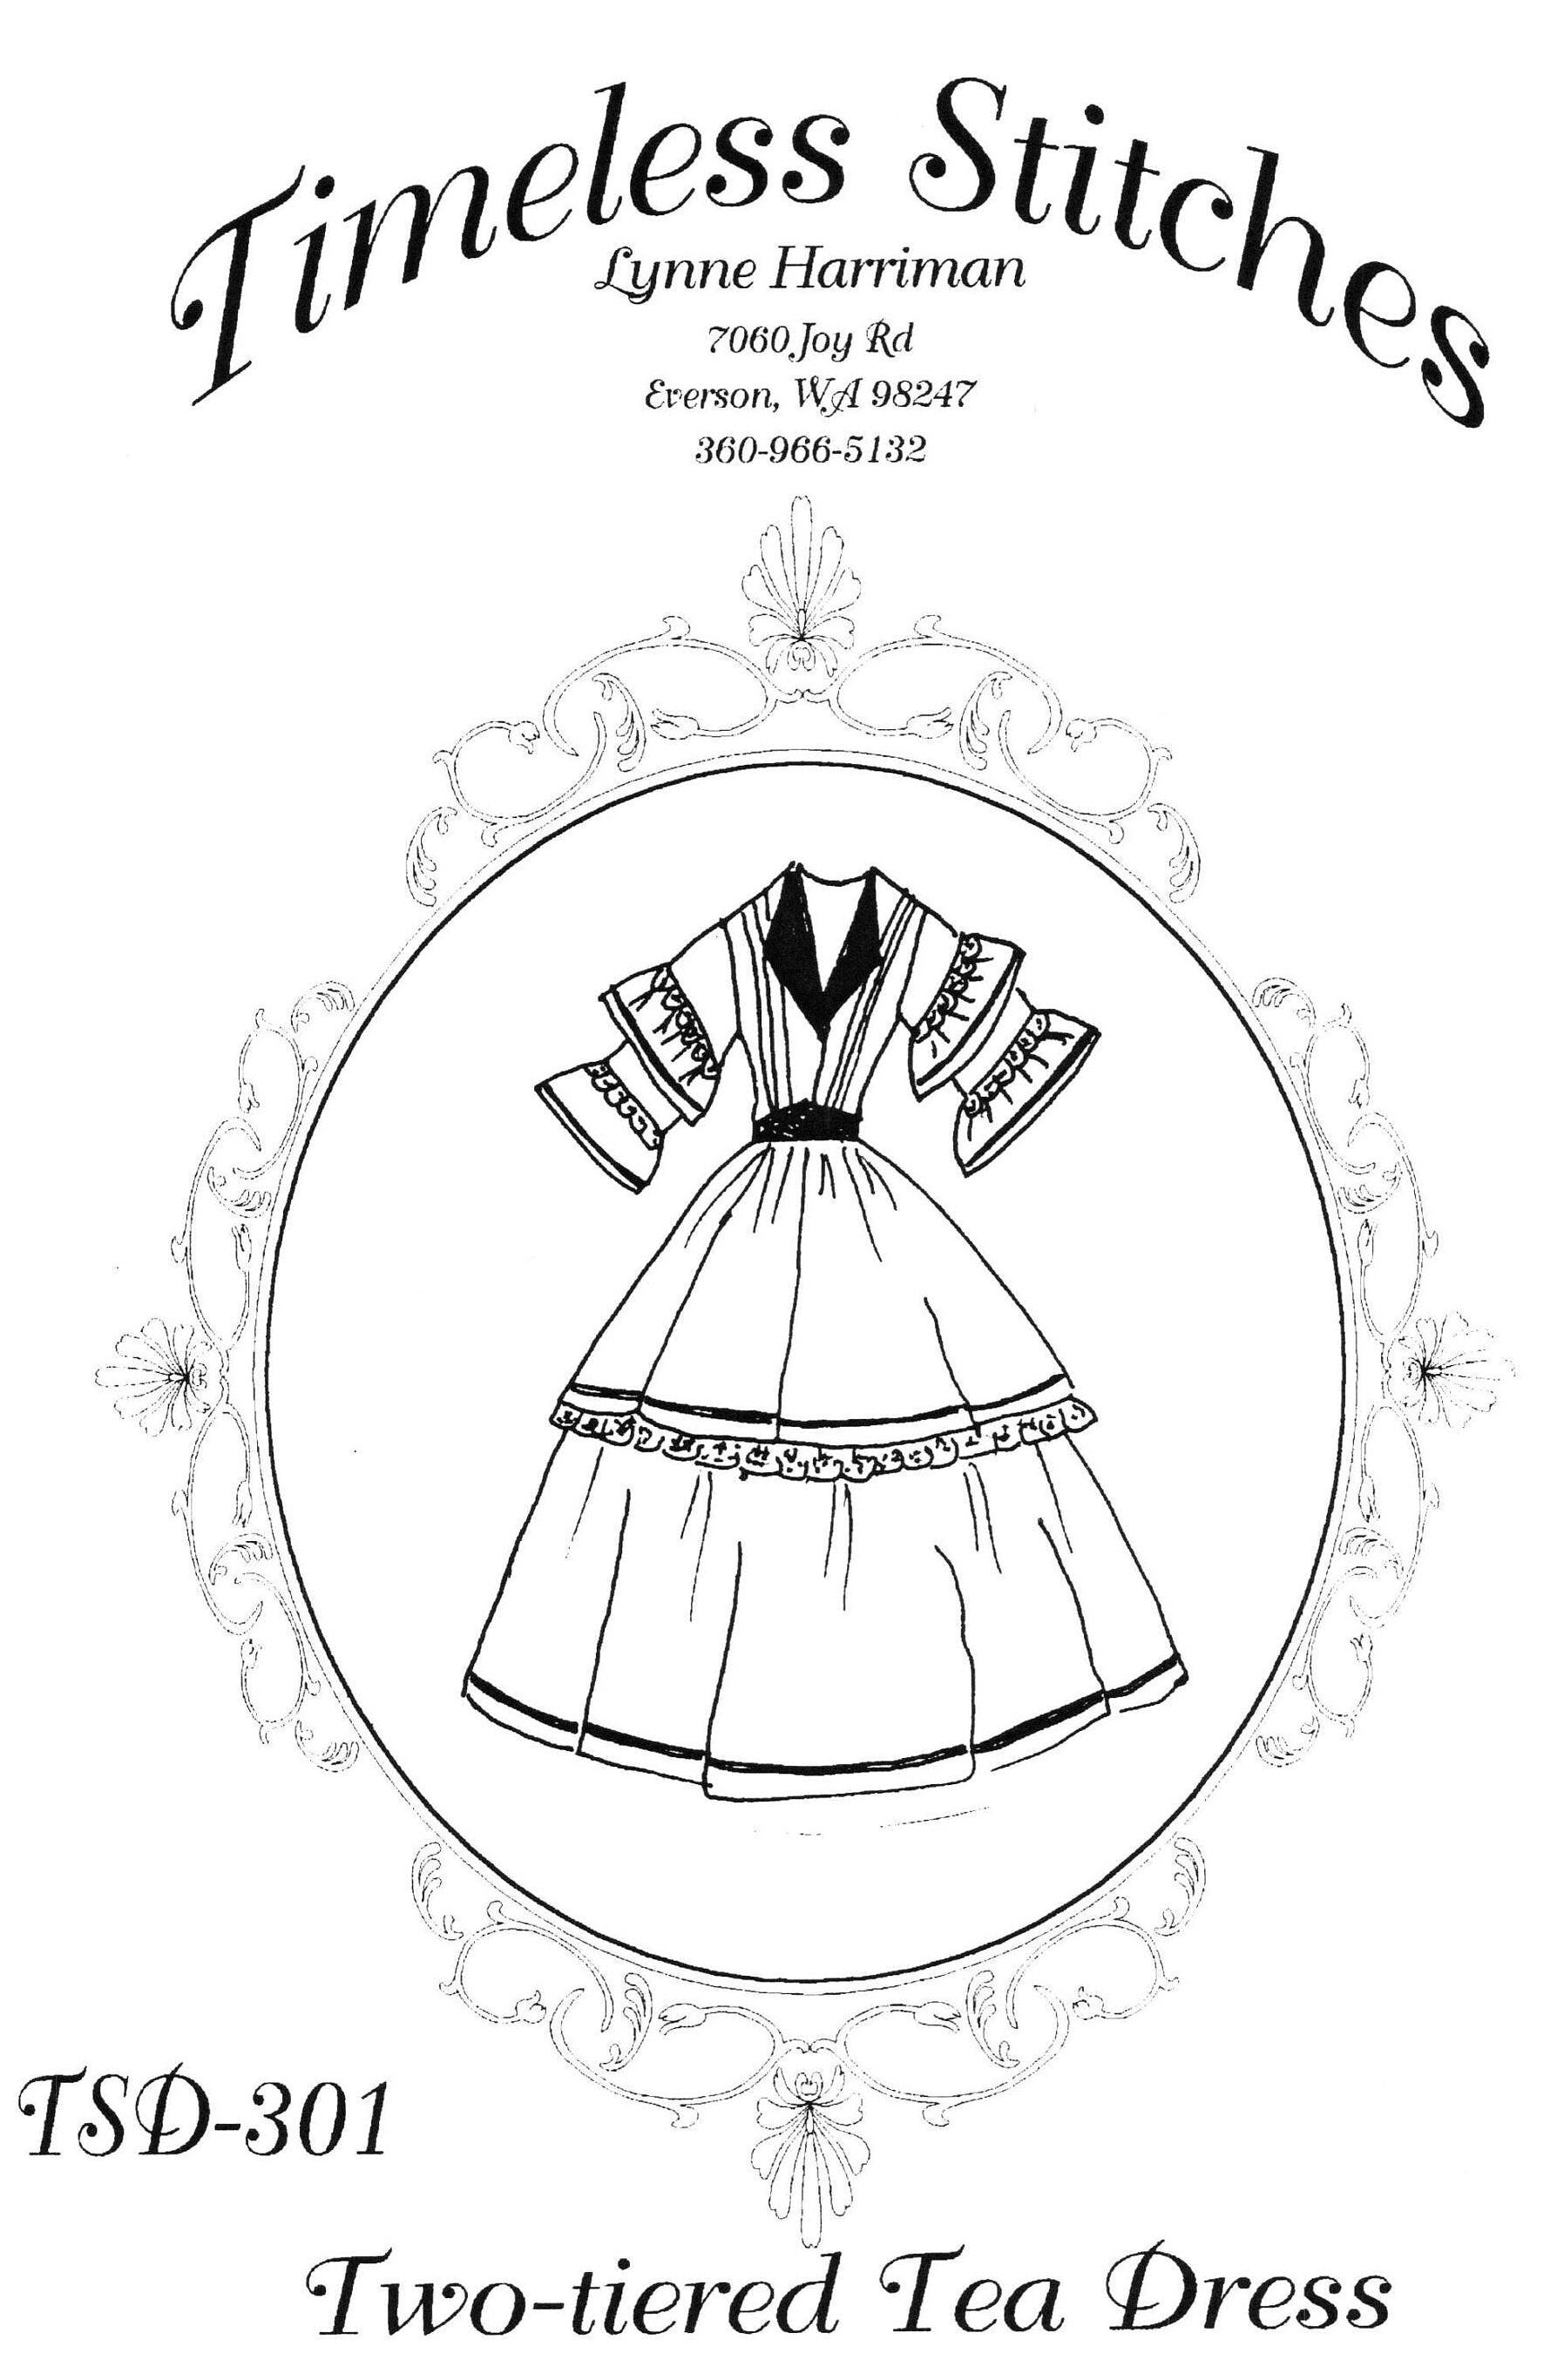 Two-Tiered Tea Dress /Mid- 19th Century/ Civil War Era Dress Pattern/ Timeless Stitches Sewing Pattern TSD-301